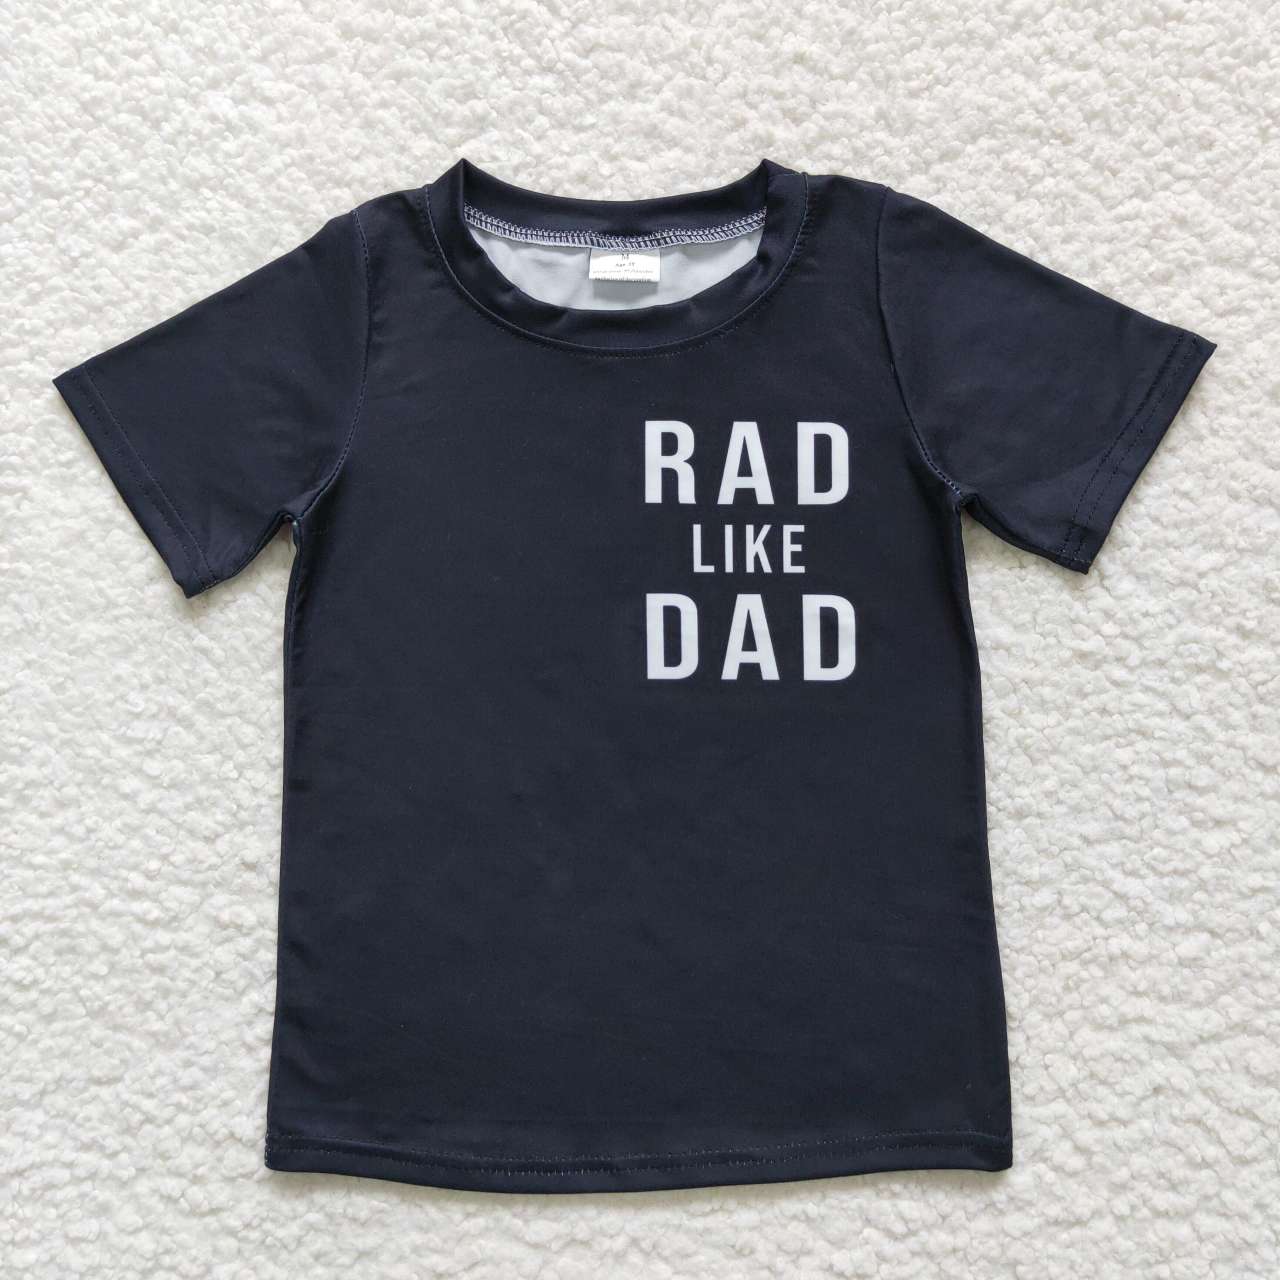 Rad like dad short sleeve t-shirt top   BT0323